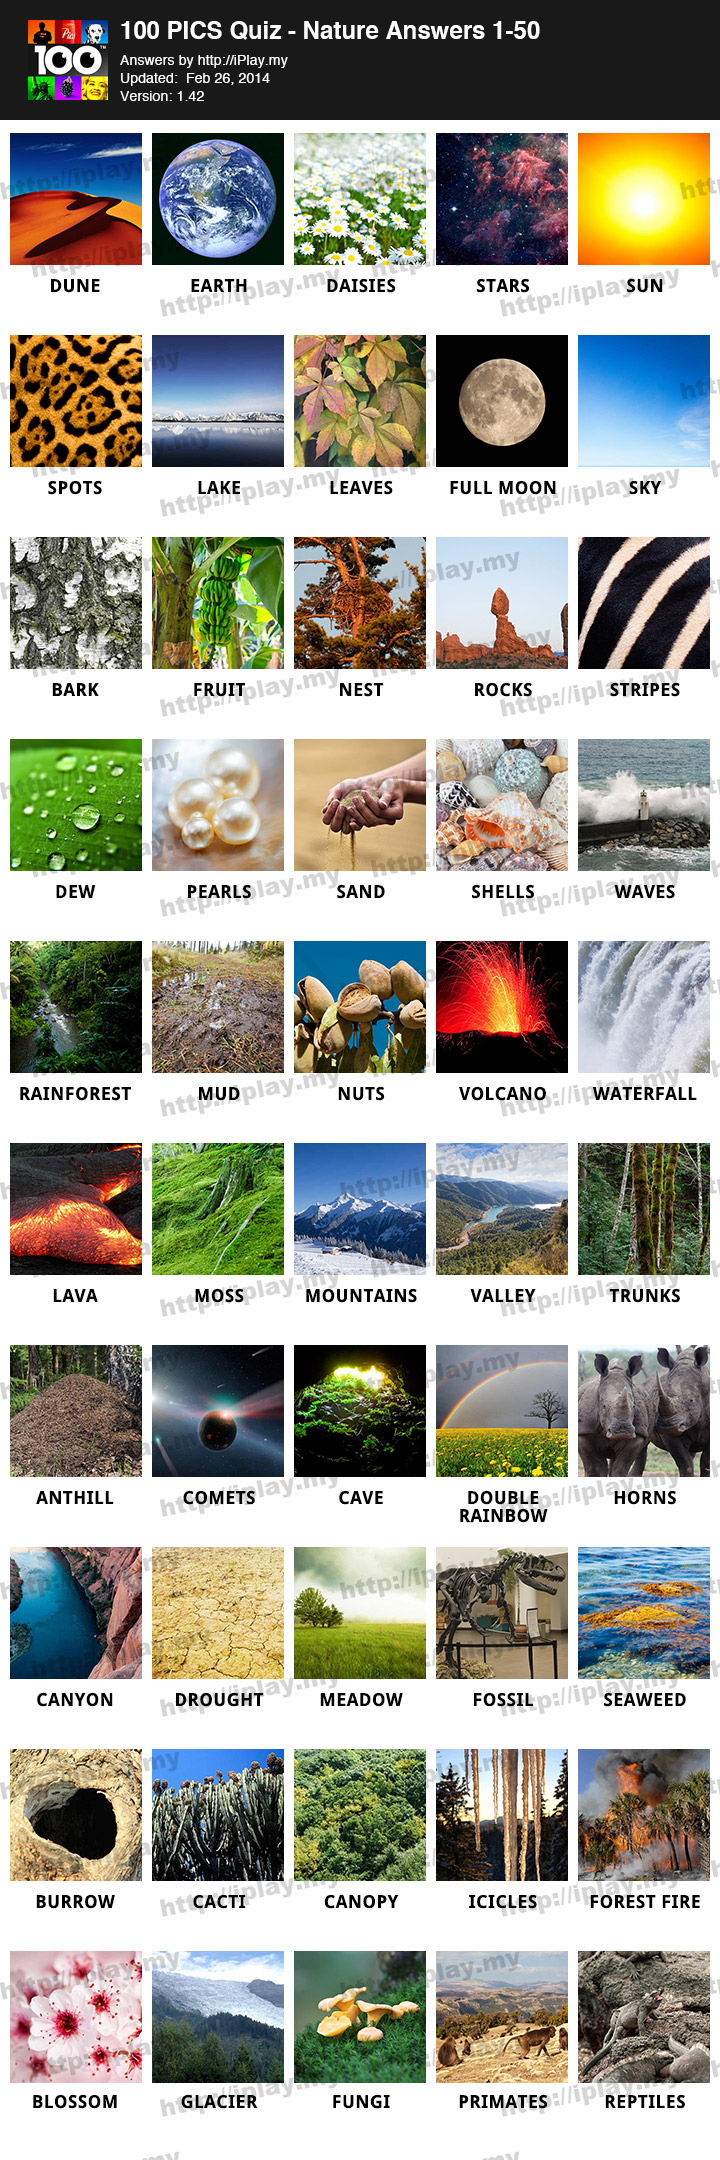 100-Pics-Quiz-Nature-Answers-1-50